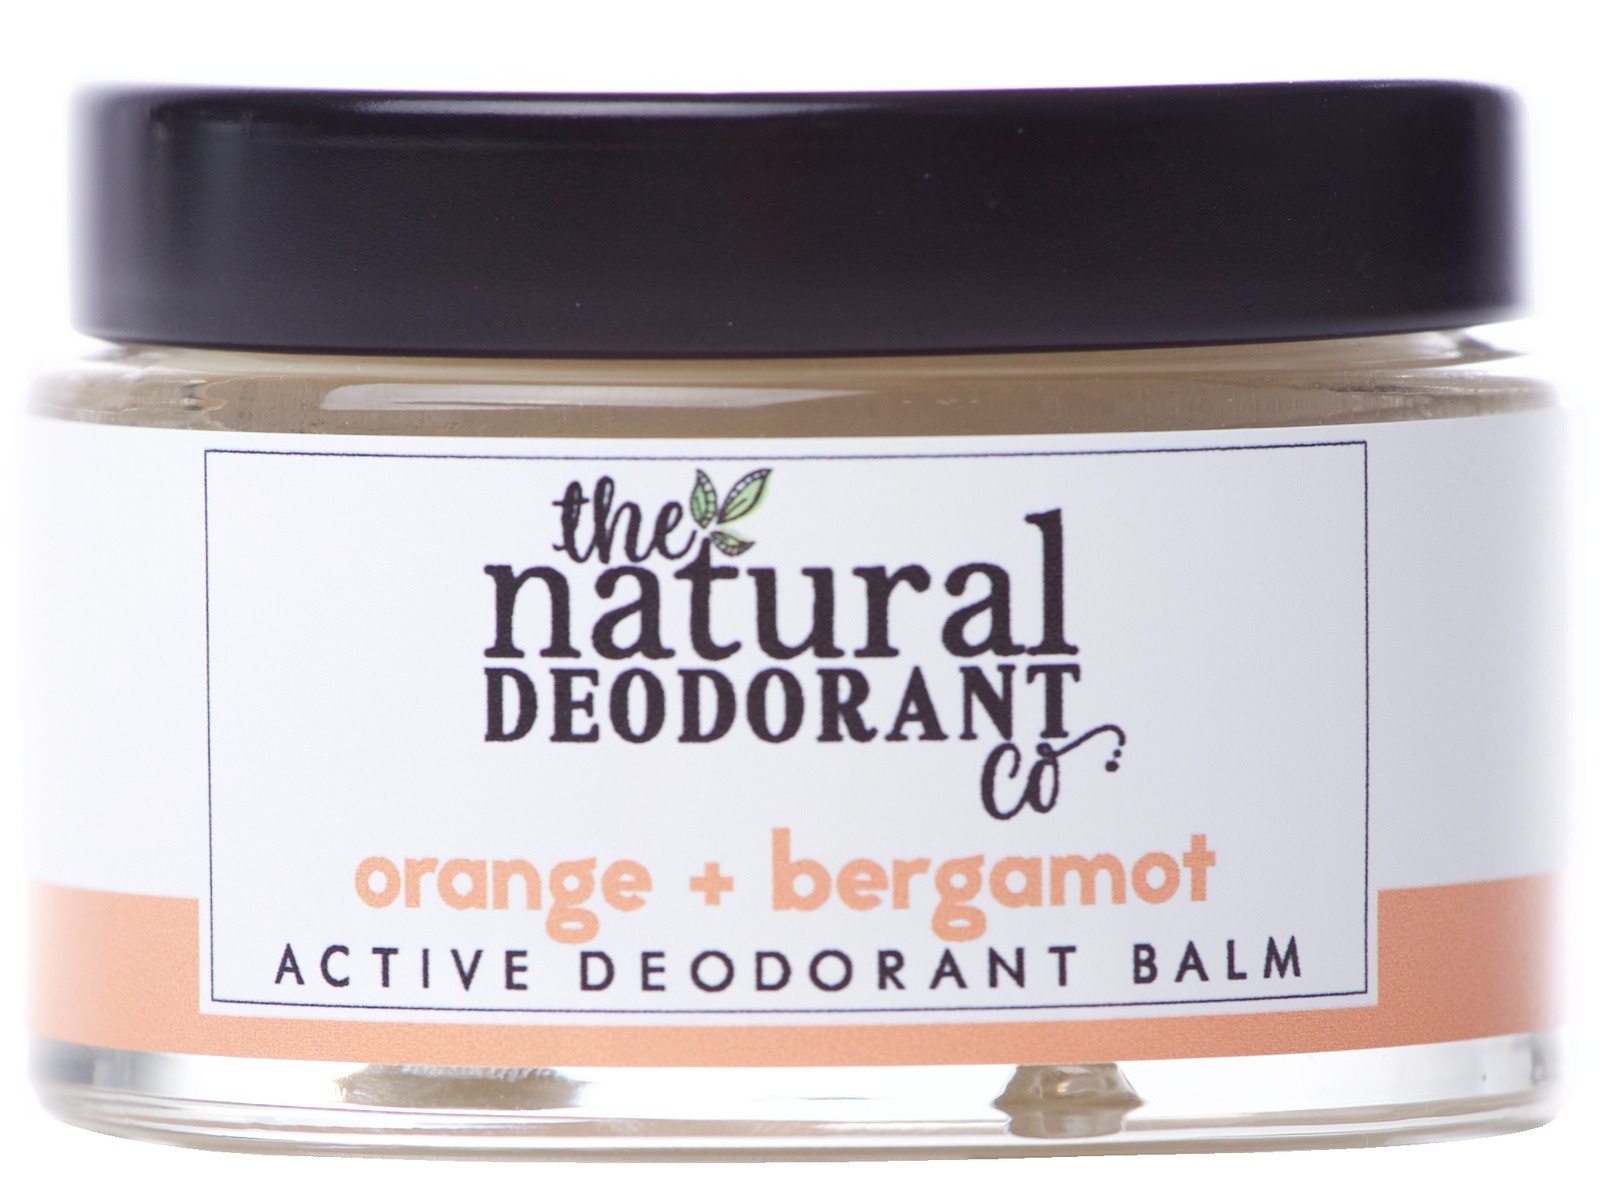 The Natural Deodorant Co. Clean Deodorant Balm Orange + Bergamot